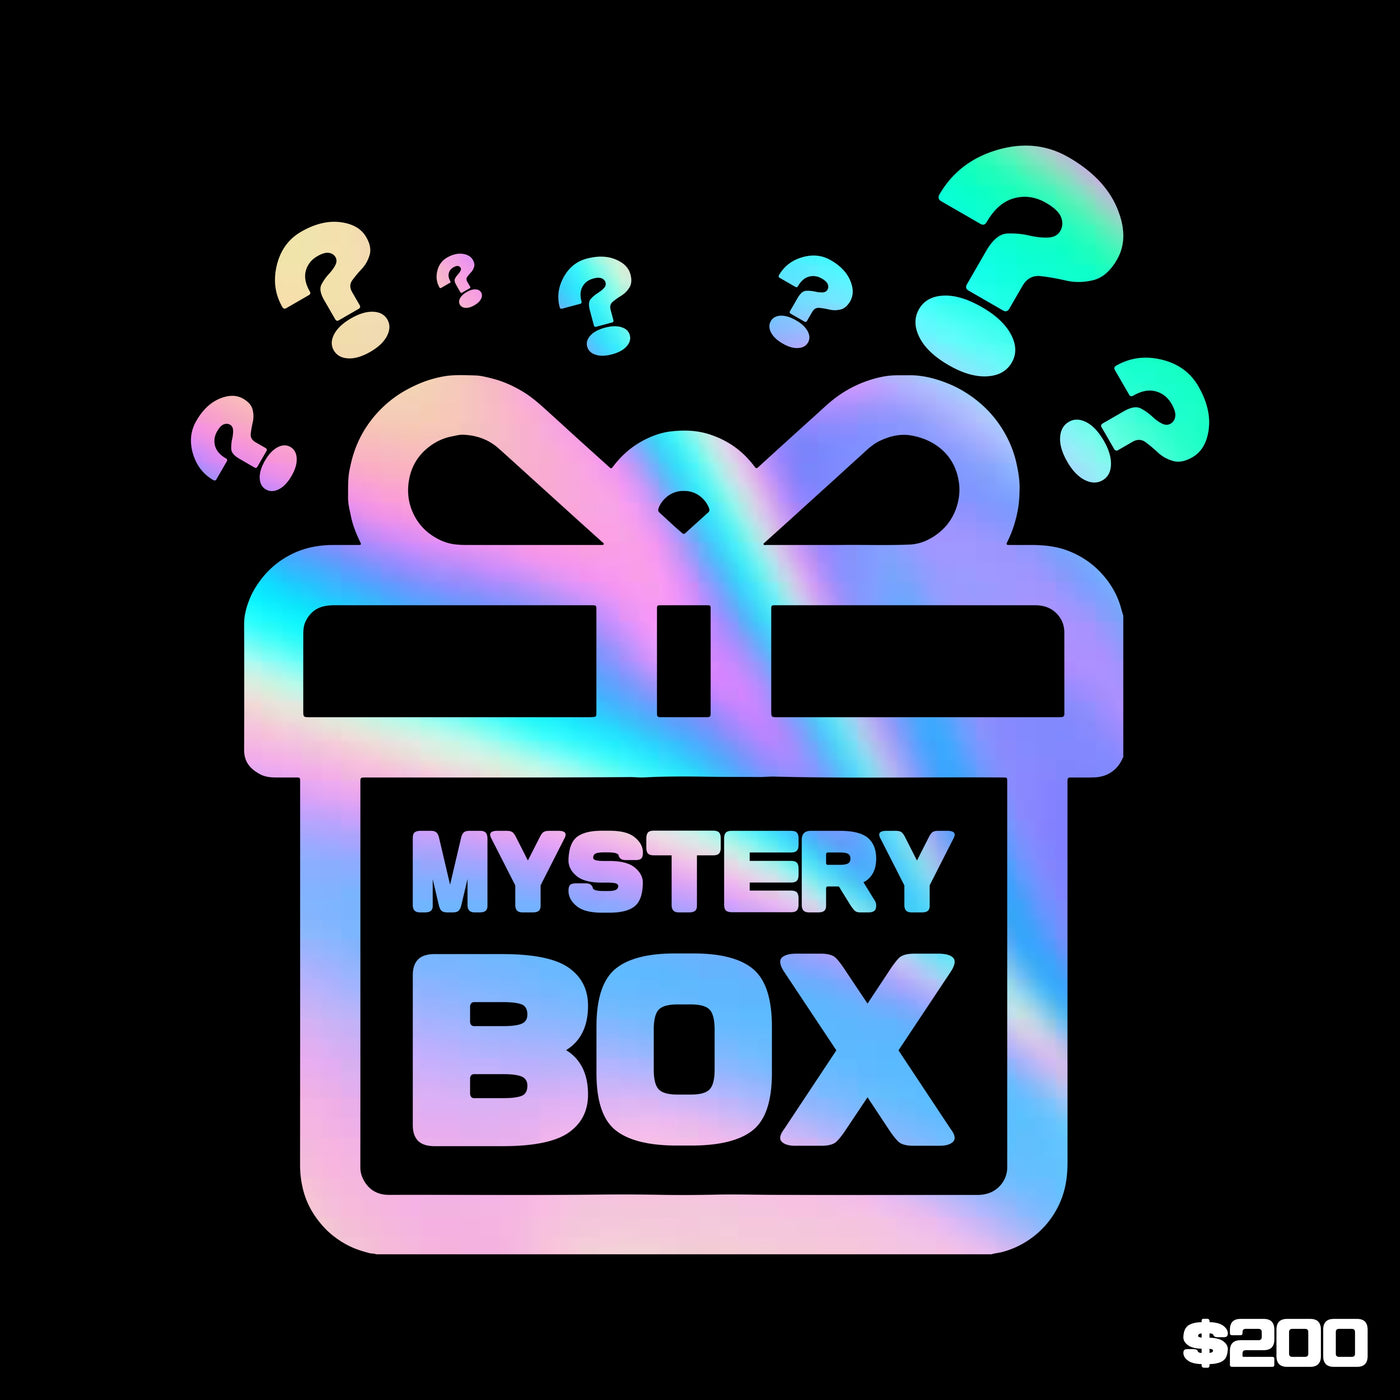 $200 "Elite" Mystery Box